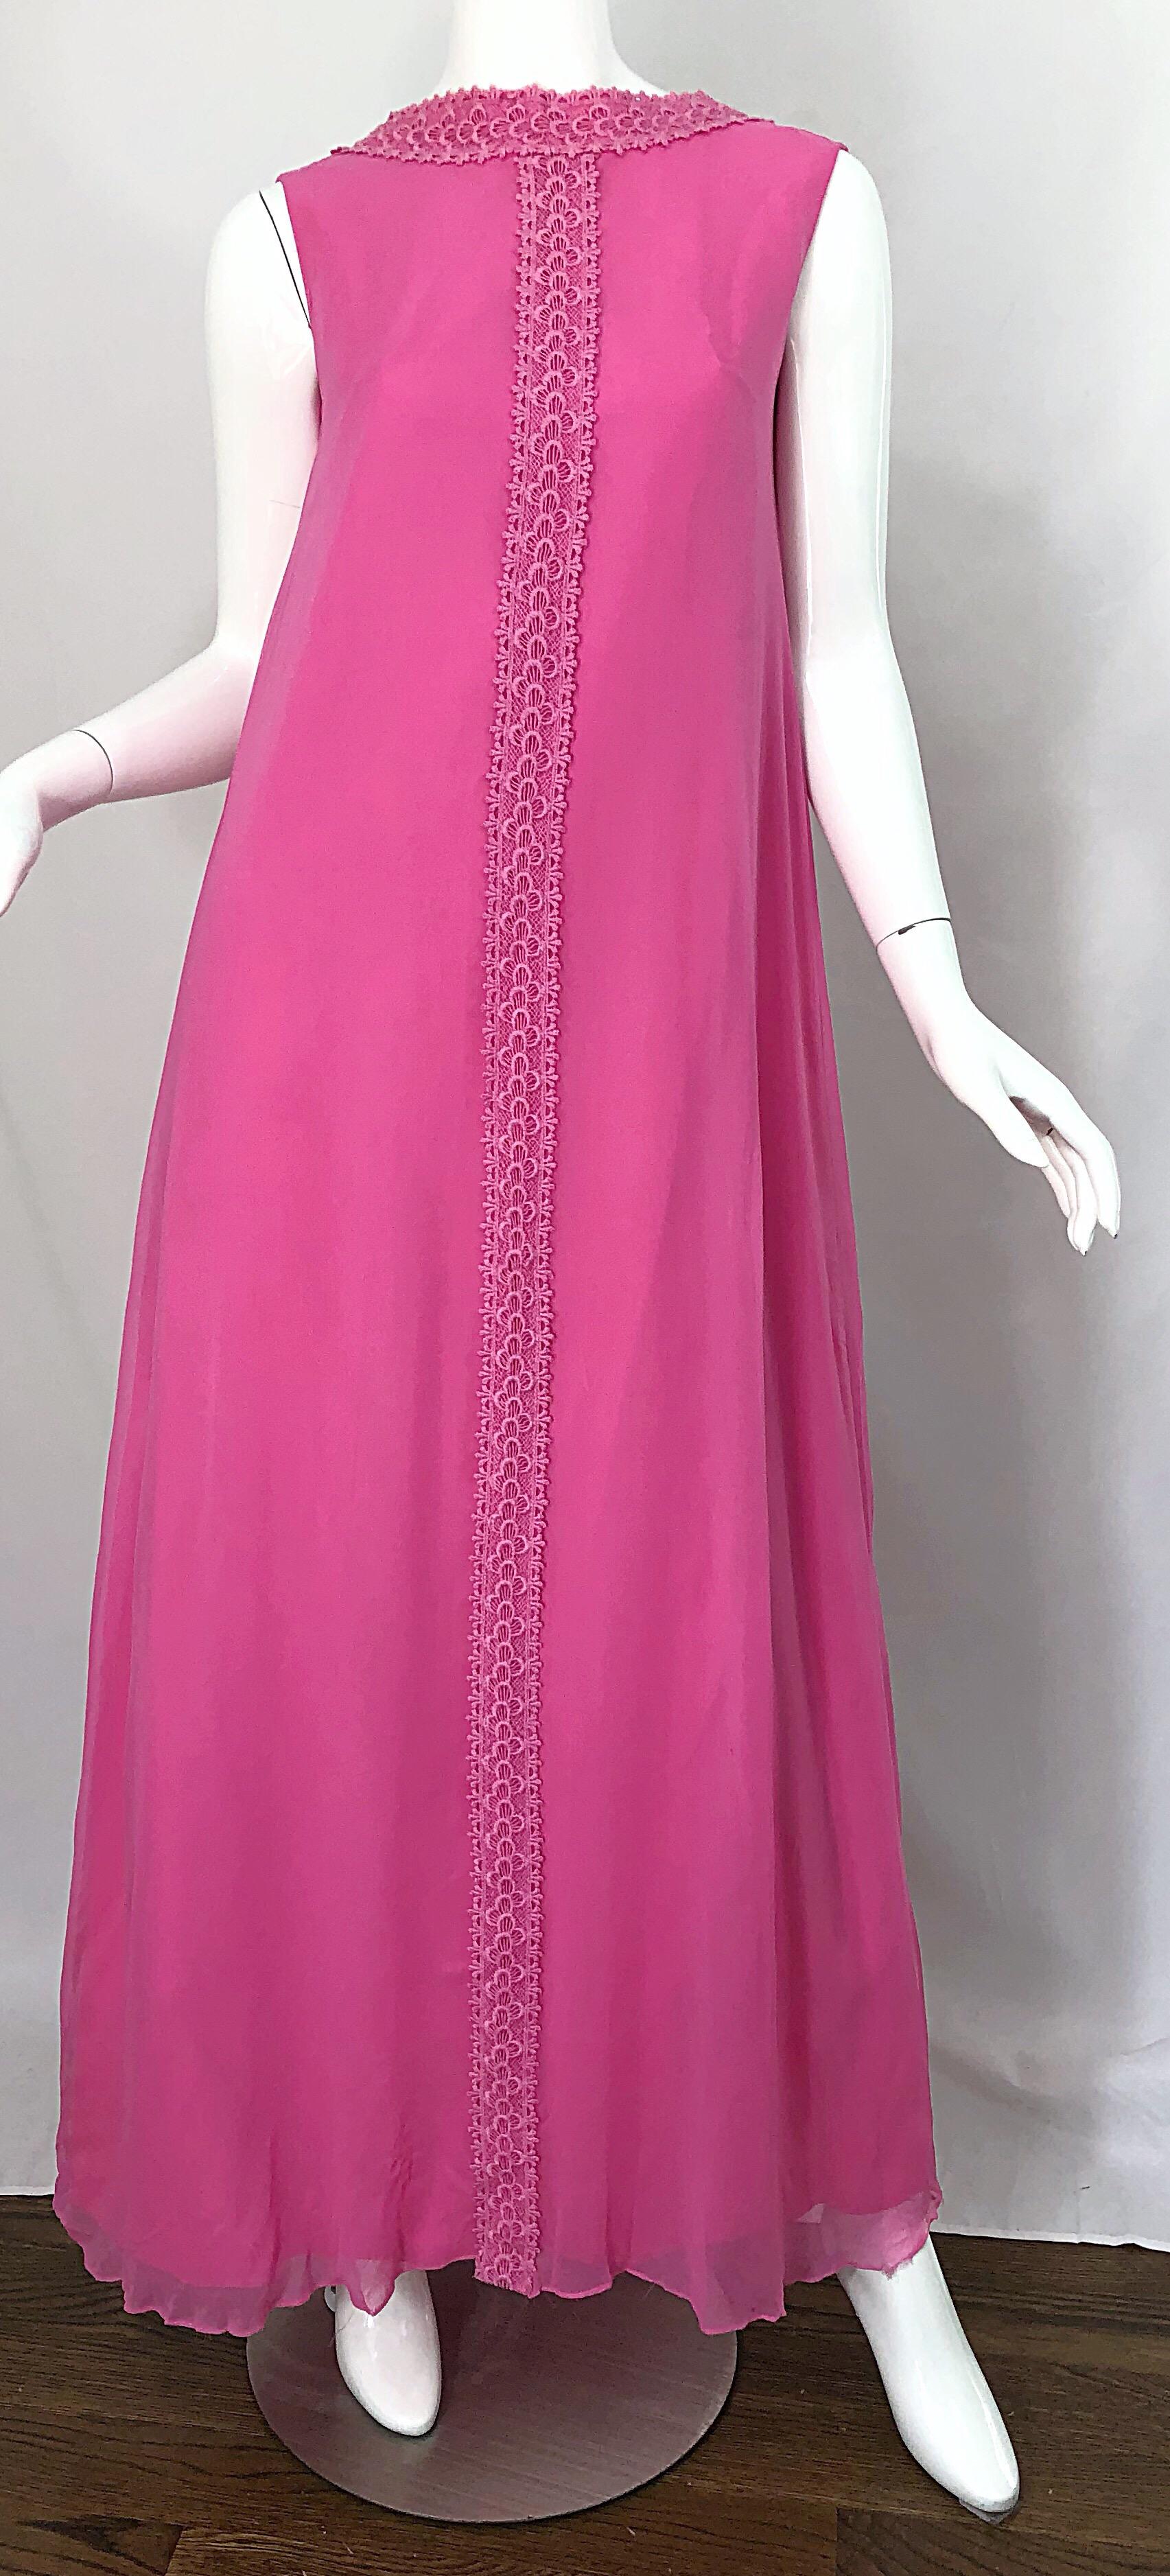 Women's 1960s Bubblegum Pink Silk Chiffon High Neck Demi Couture Vintage 60s Gown Dress For Sale